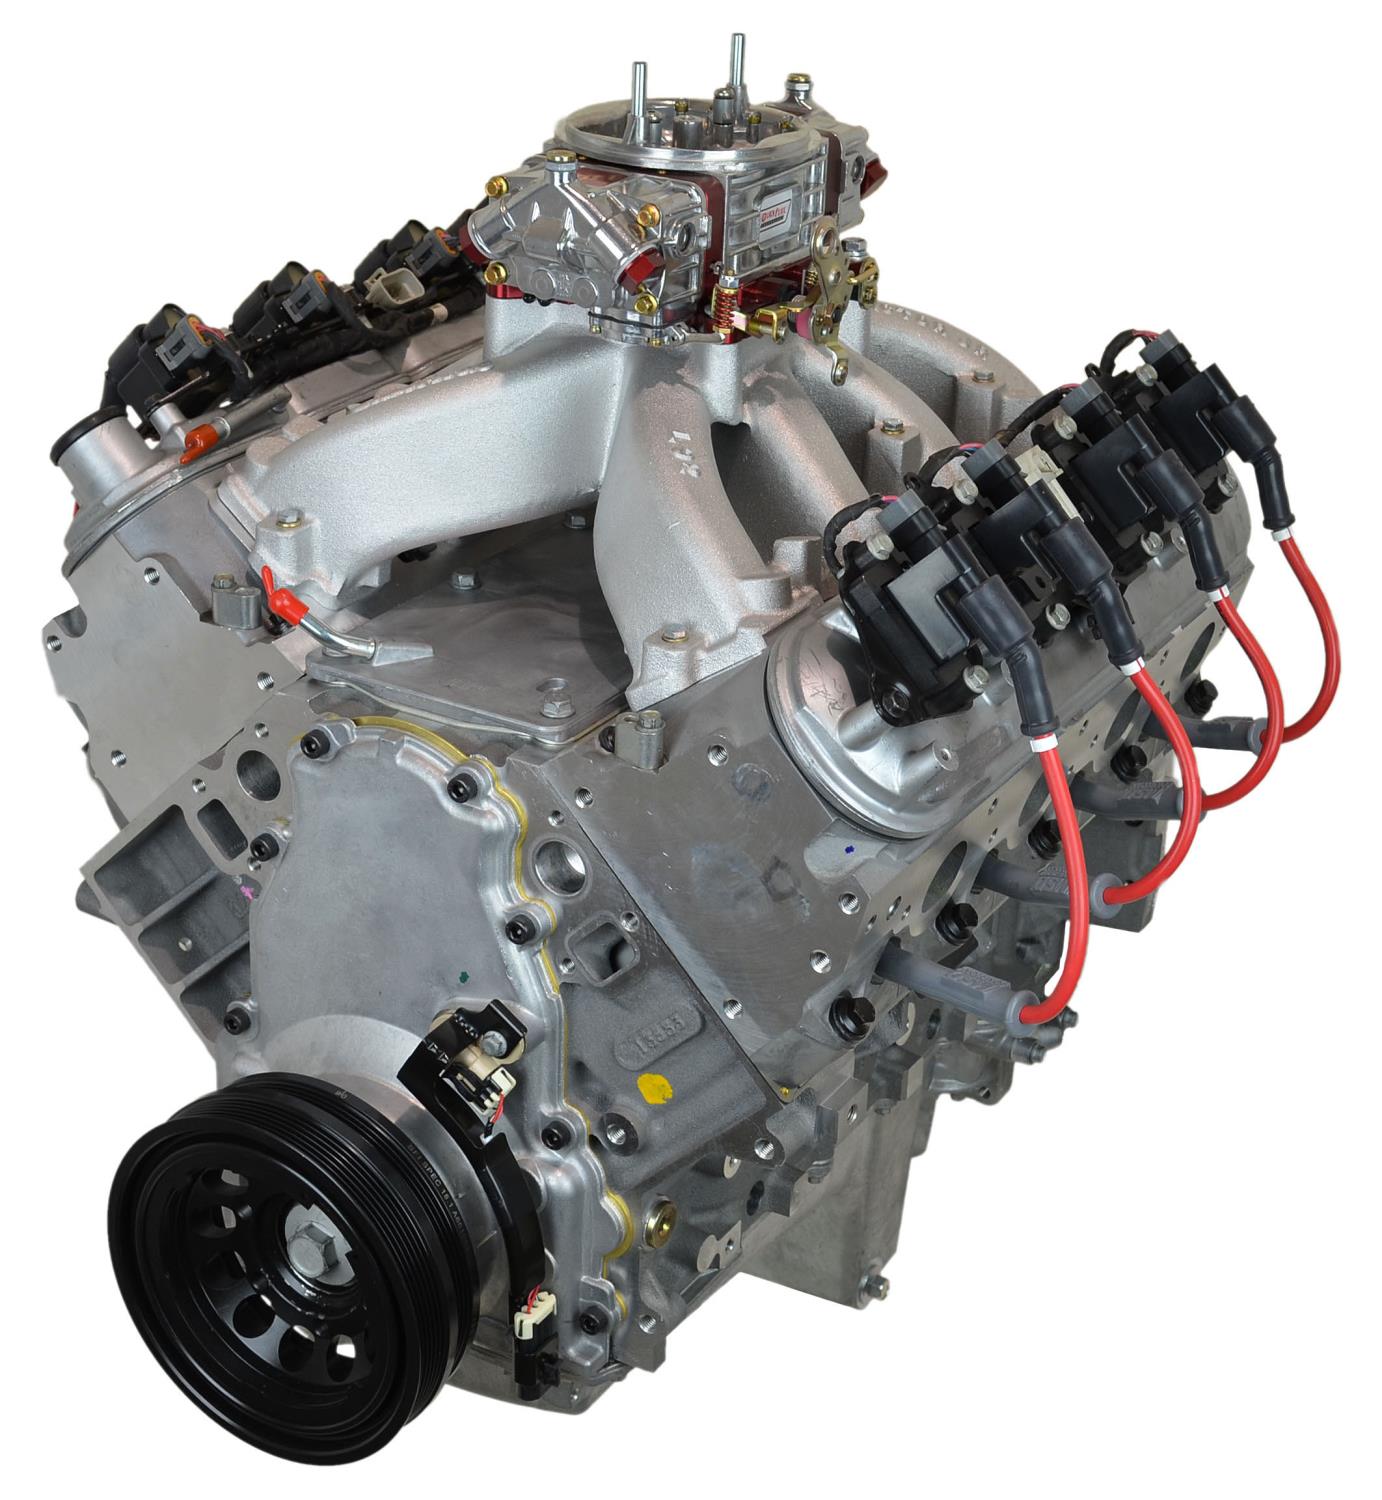 LS02C High Performance Crate Engine GM LS3 415ci 620HP / 550TQ